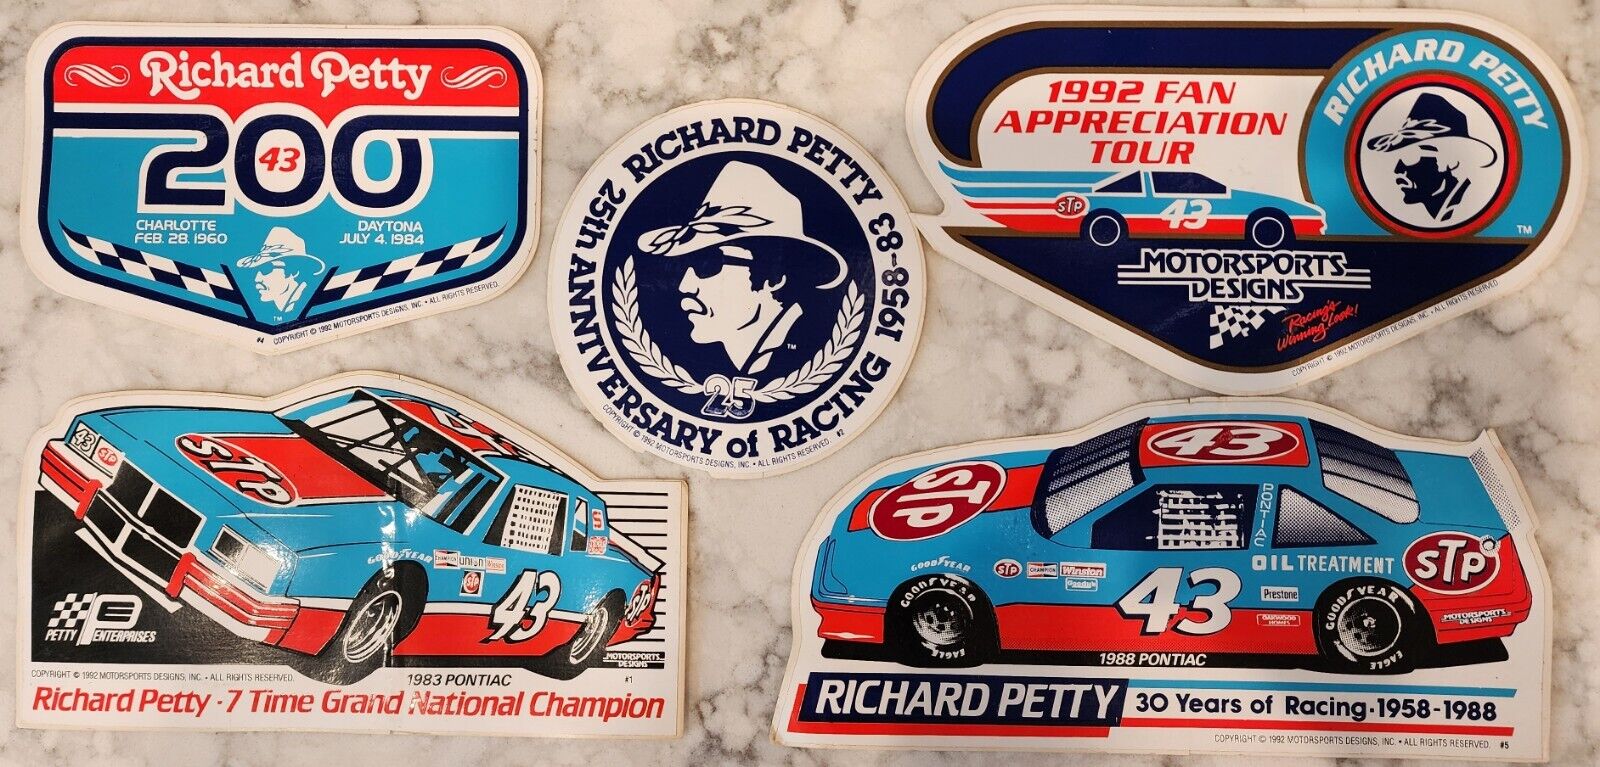 Lot of 5 Vintage Richard Petty #43 STP Bumper Stickers By Motorsports Designs